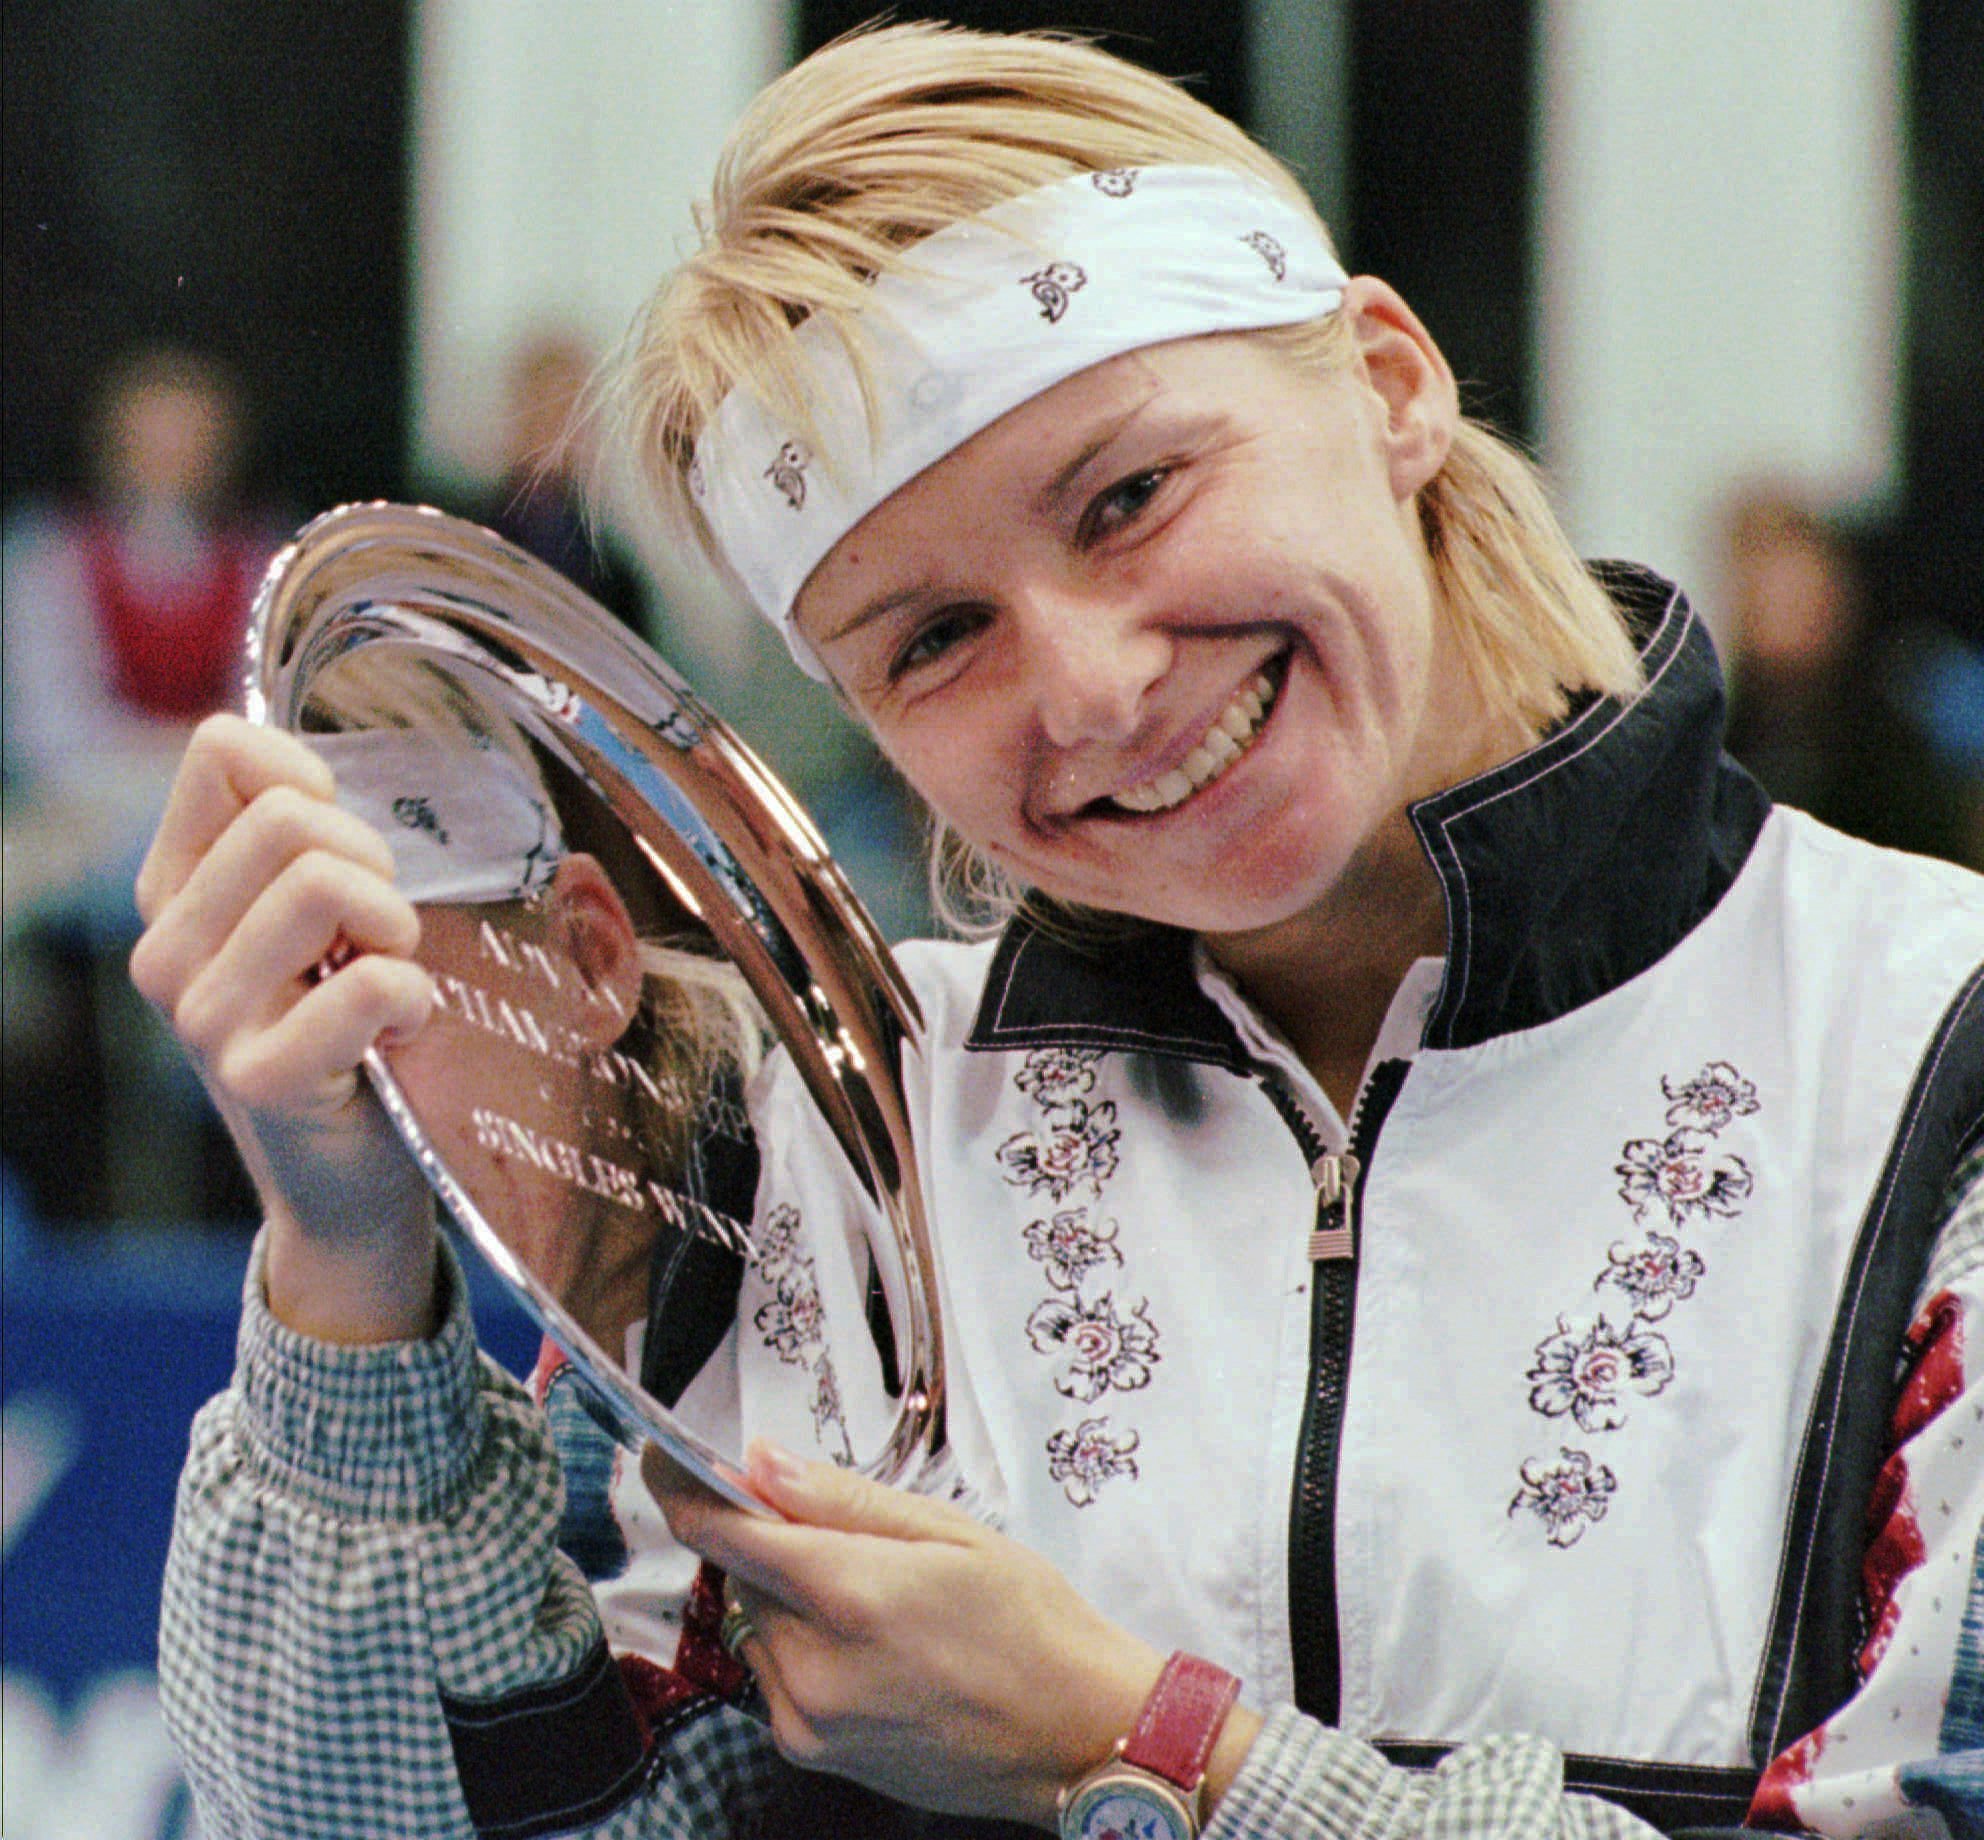 Former Wimbledon Champion Jana Novotna Dies At 49 After Cancer Battle